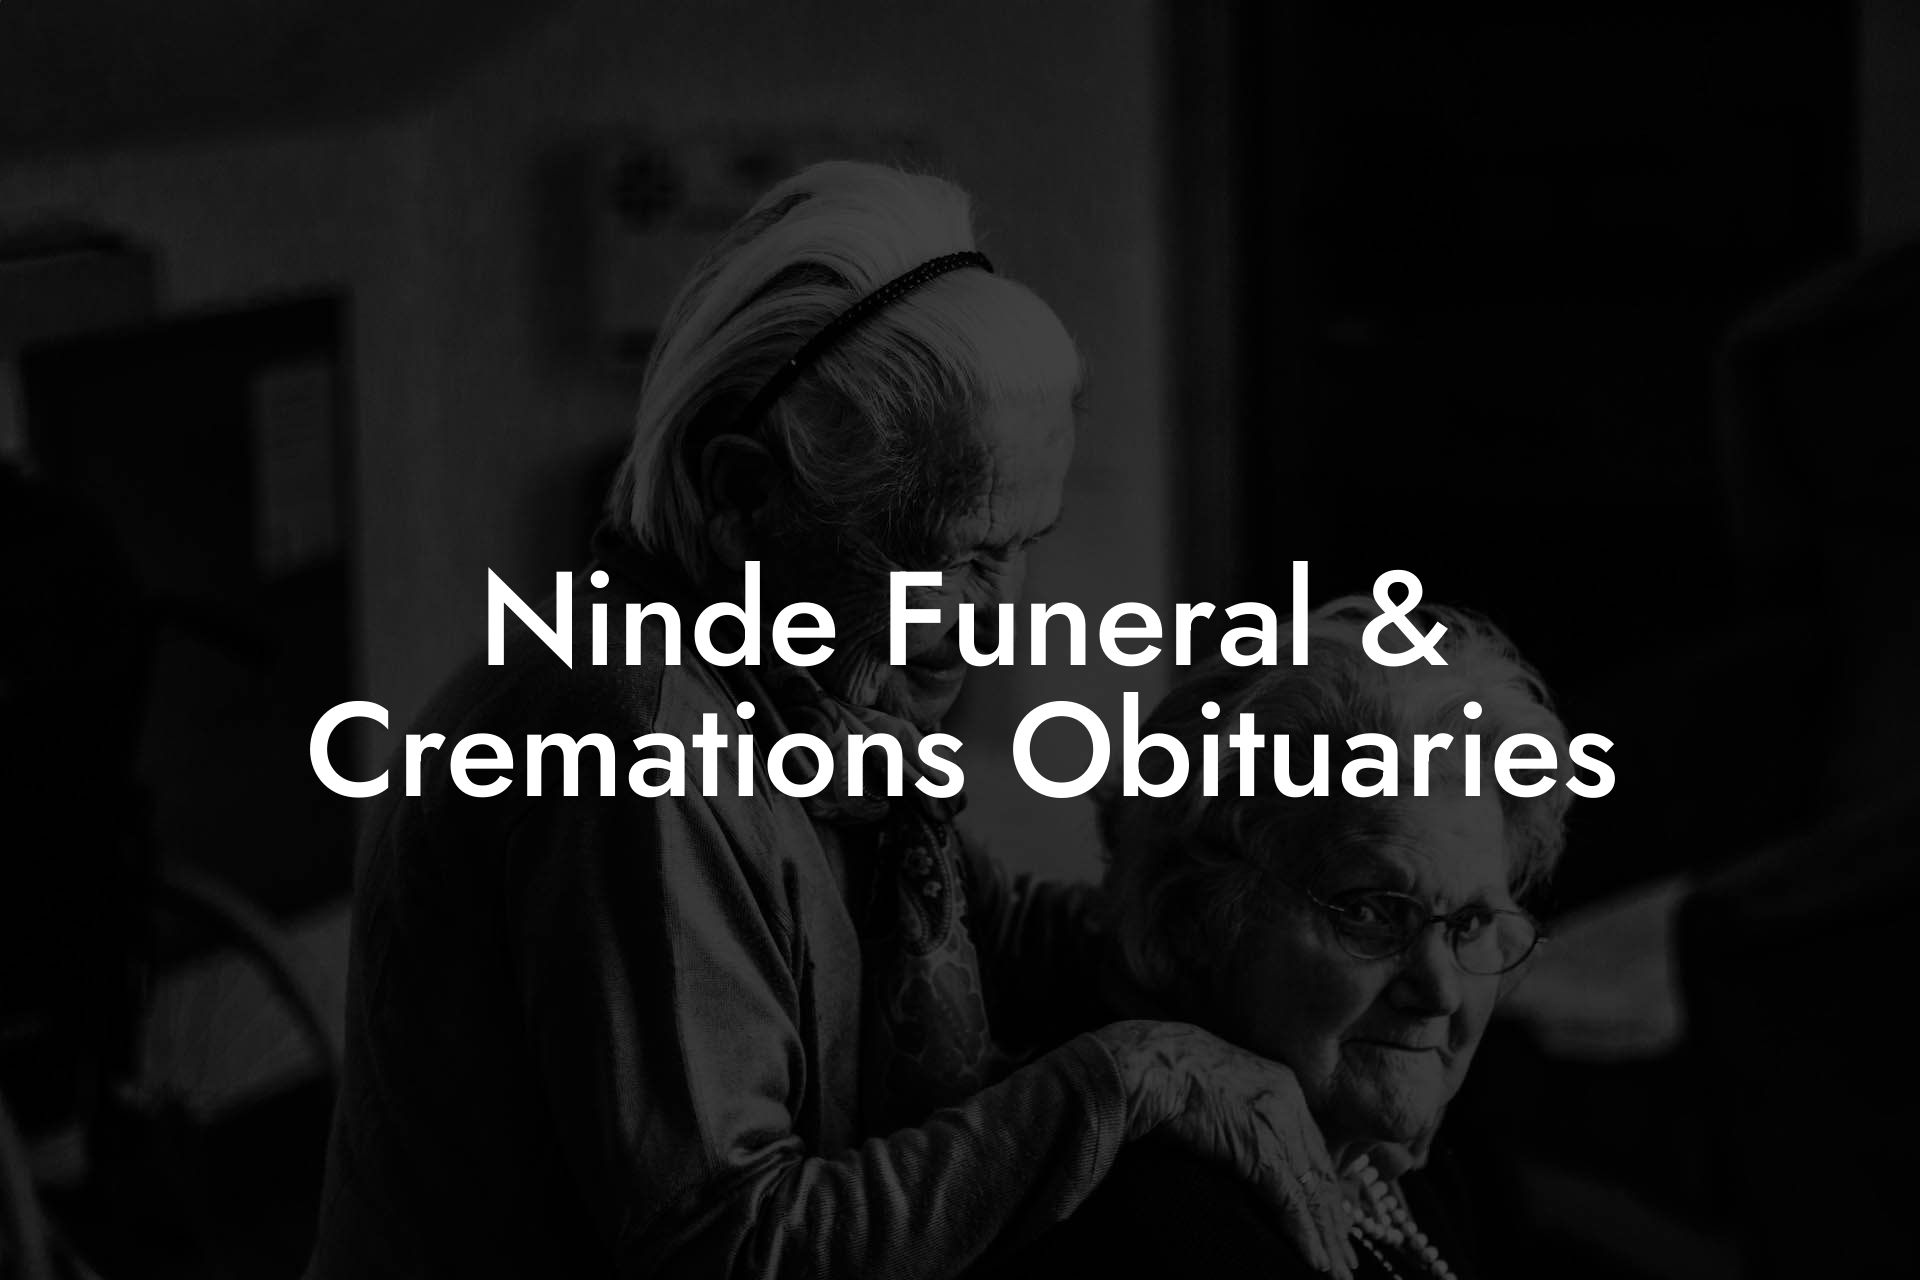 Ninde Funeral & Cremations Obituaries